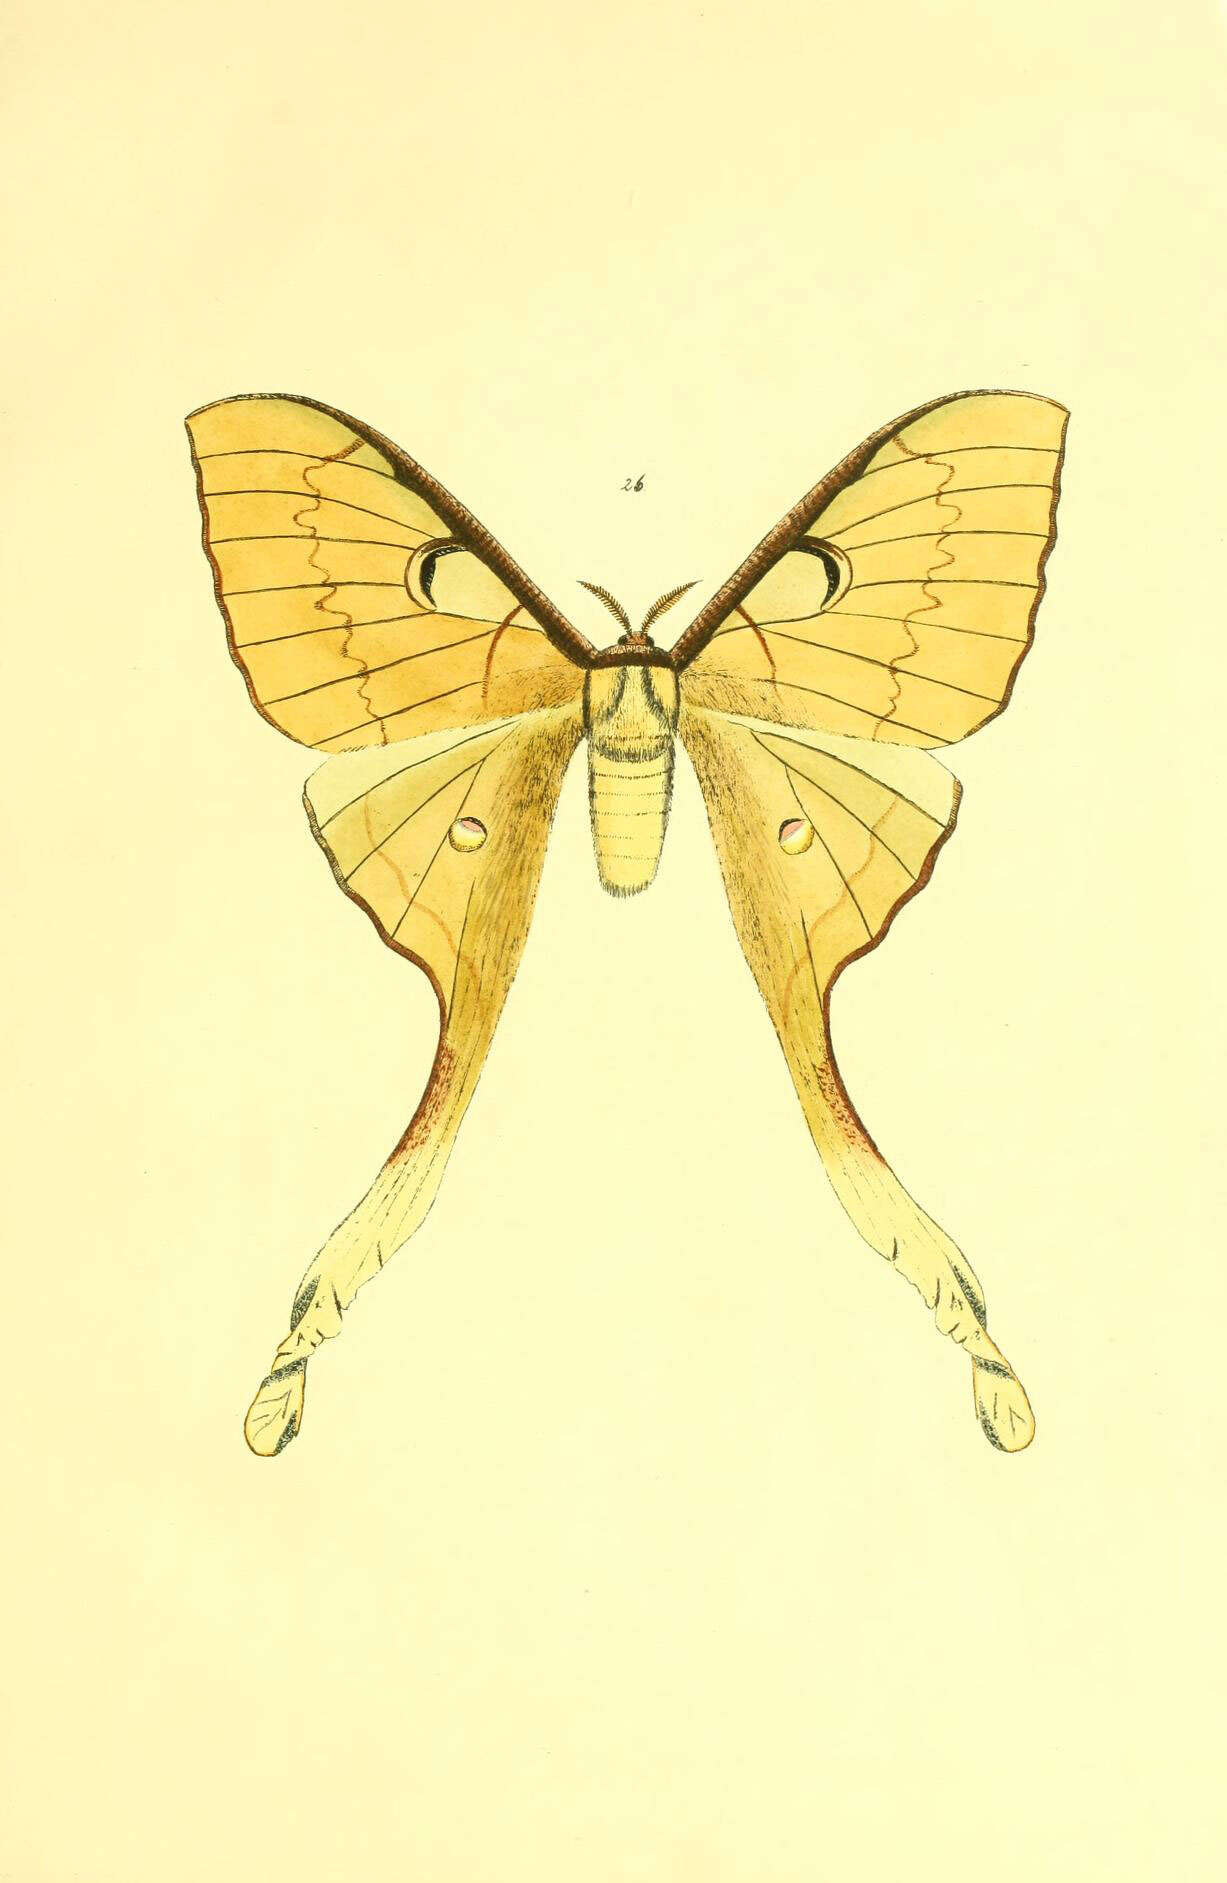 Image of Malaysian moon moth